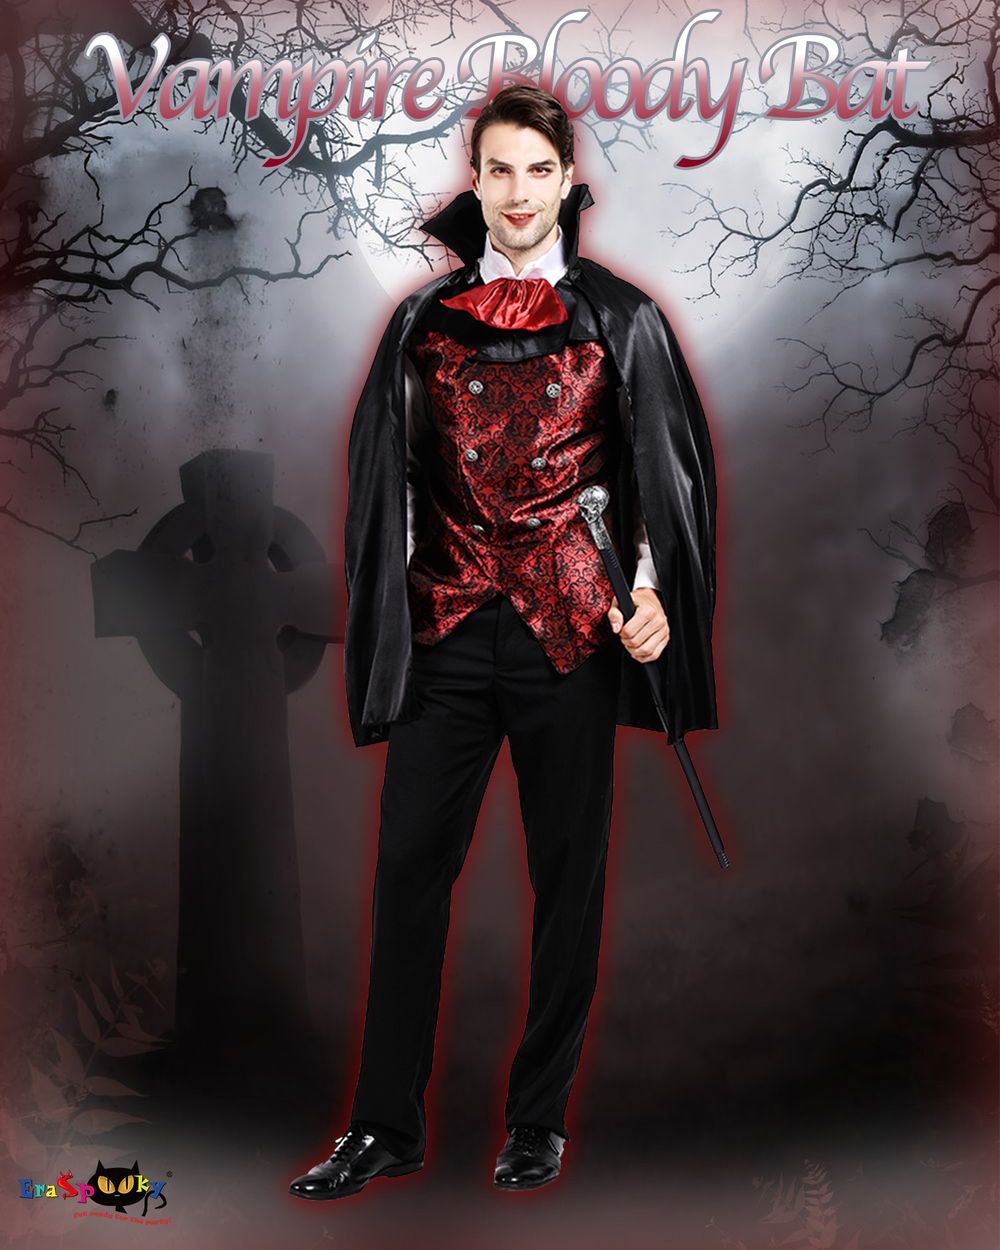 EraSpooky Vampire Disfraz de Halloween Hombres Gothic Dracula Adult Fancy Dress